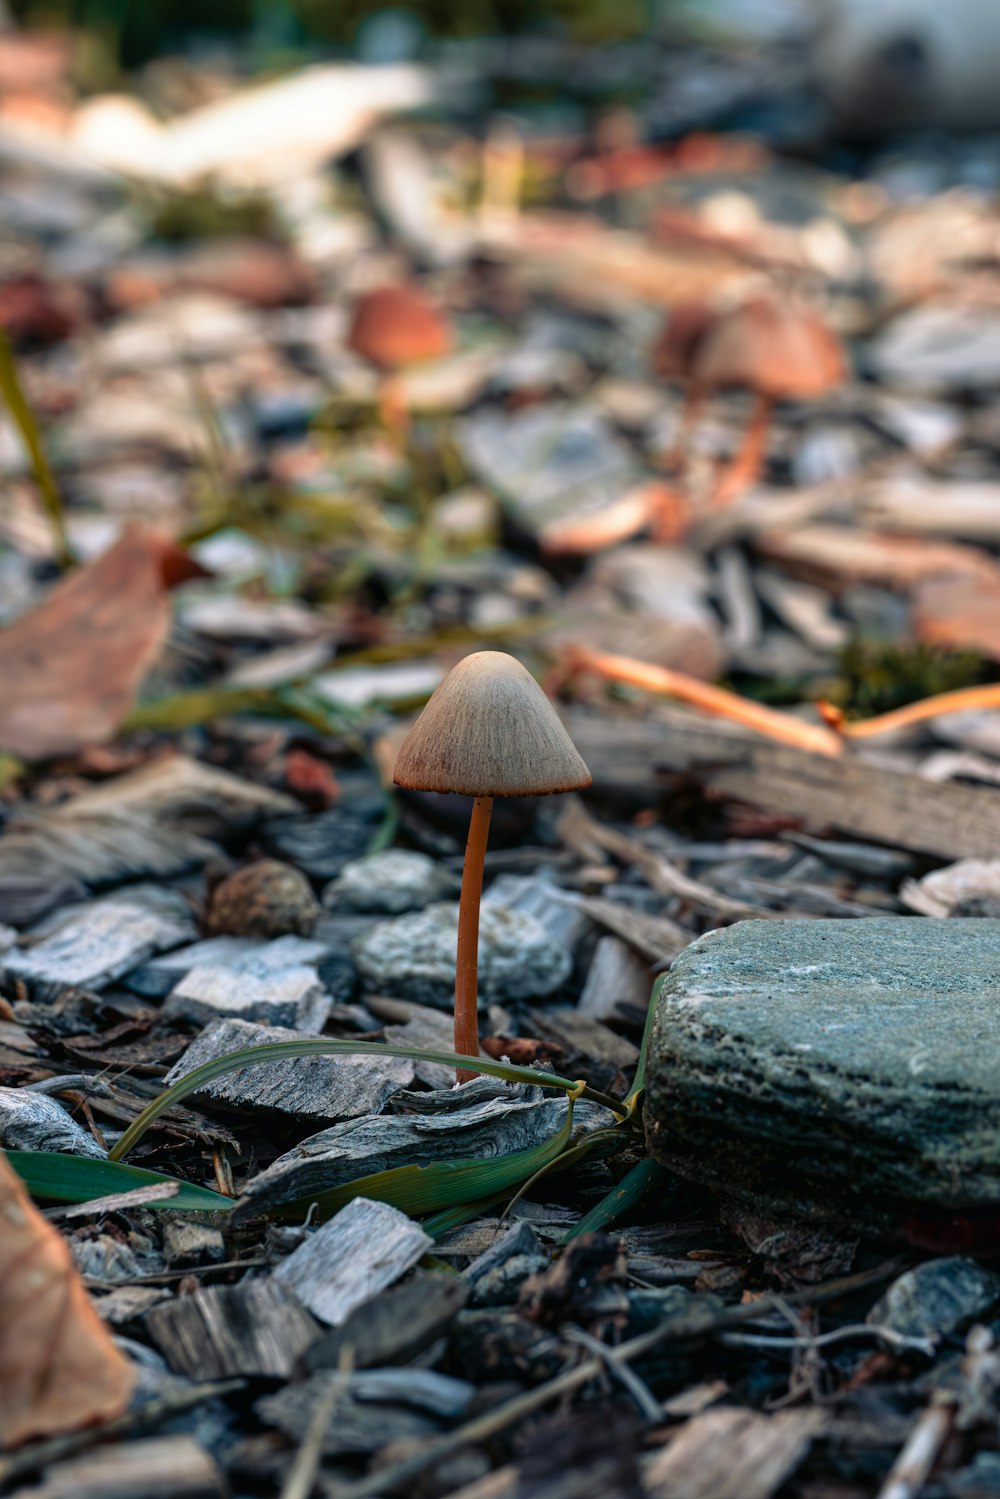 a mushroom sitting on top of a pile of rocks